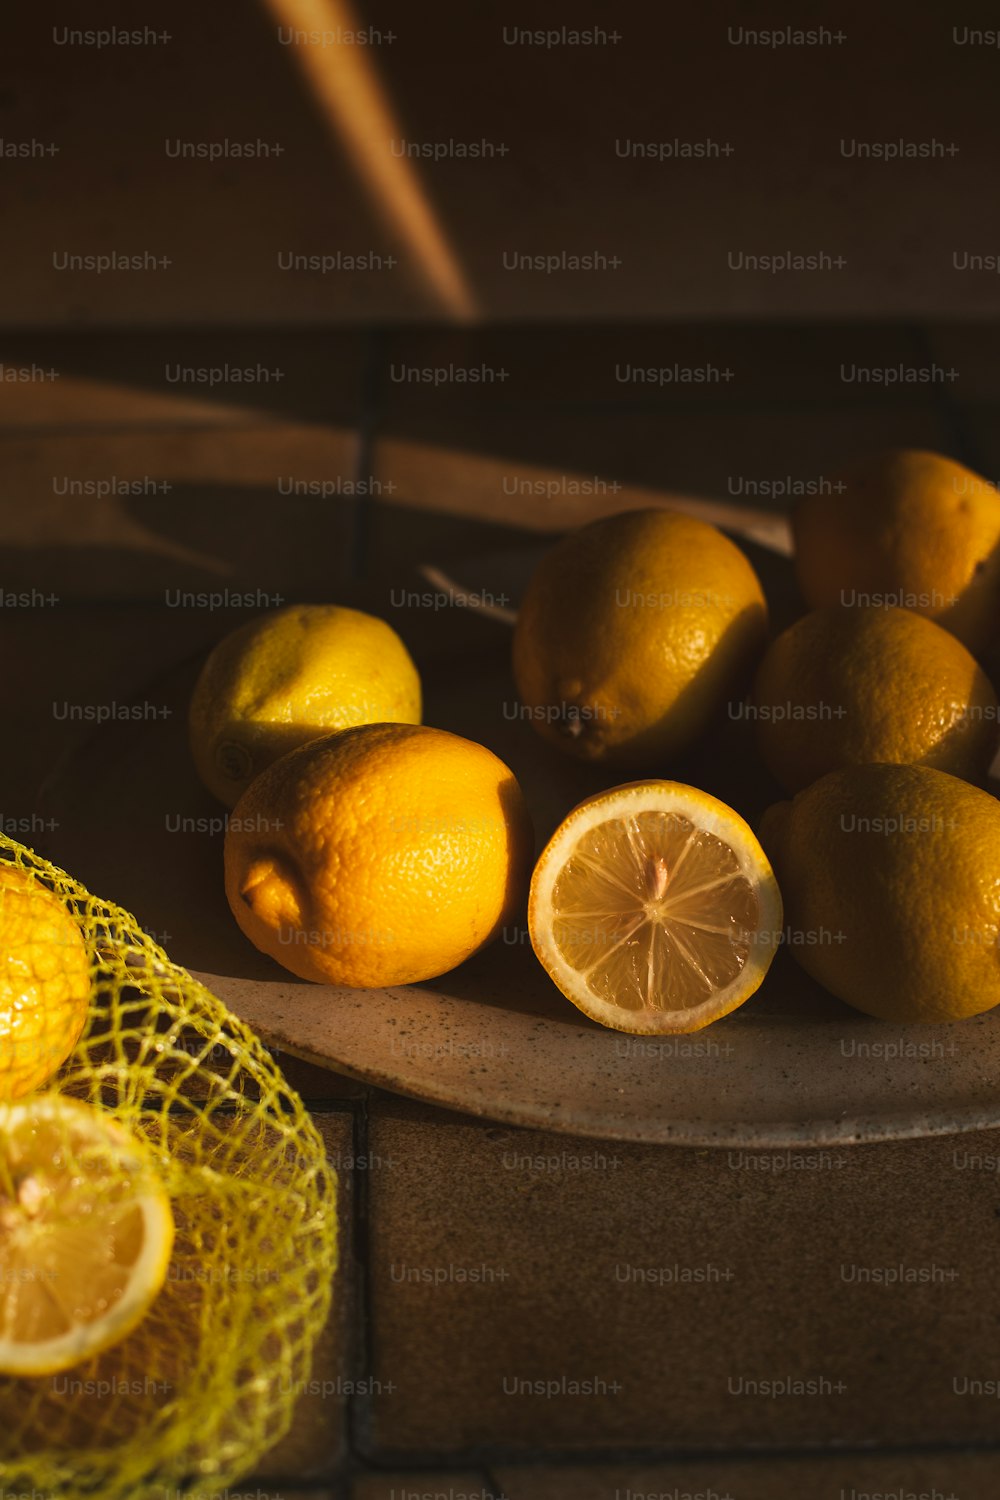 a bowl of lemons and a mesh bag of oranges